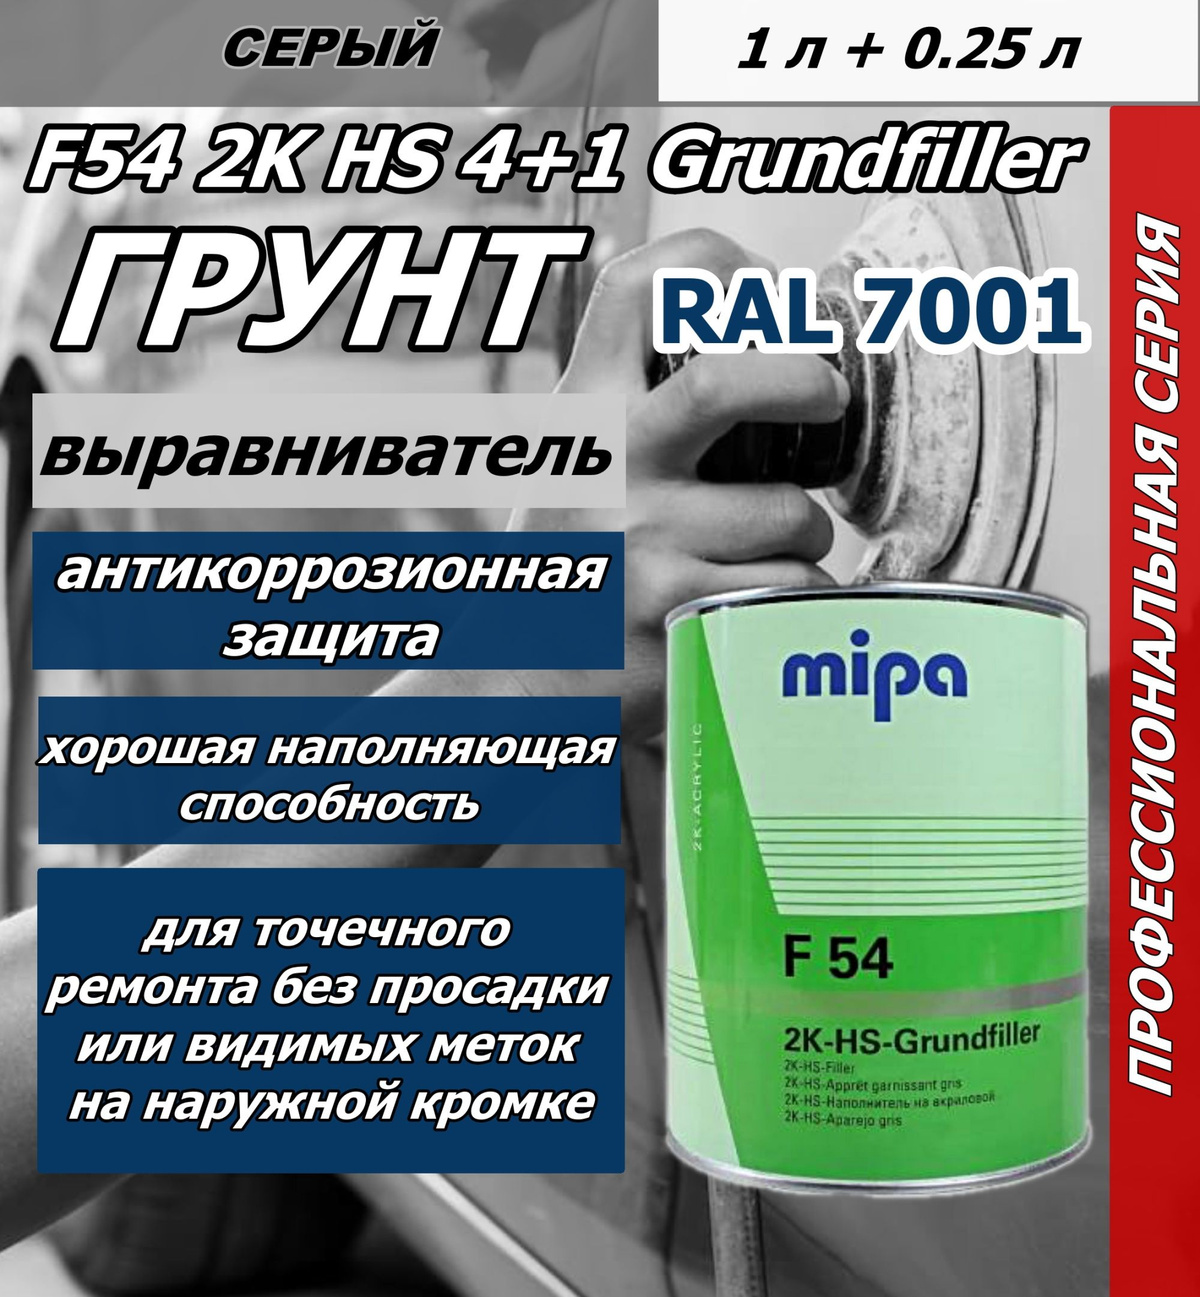 Грунт Mipa F54 2K HS 4+1 Grundfiller серый с отвердителем (1л + 0,25л)